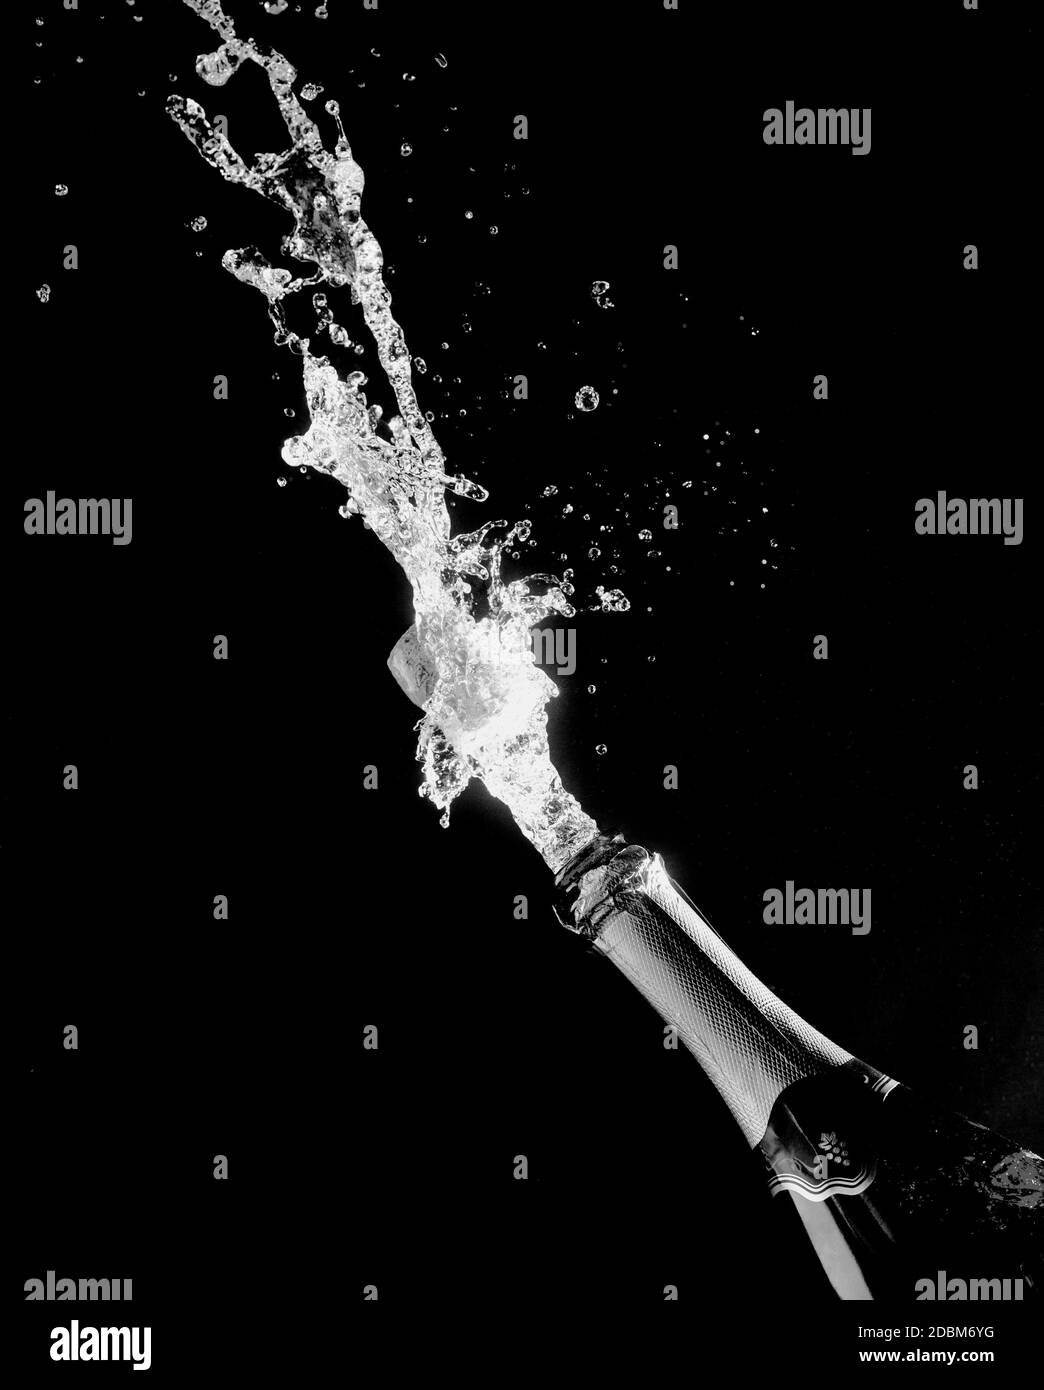 Celebration theme with splashing champagne black-white. Stock Photo